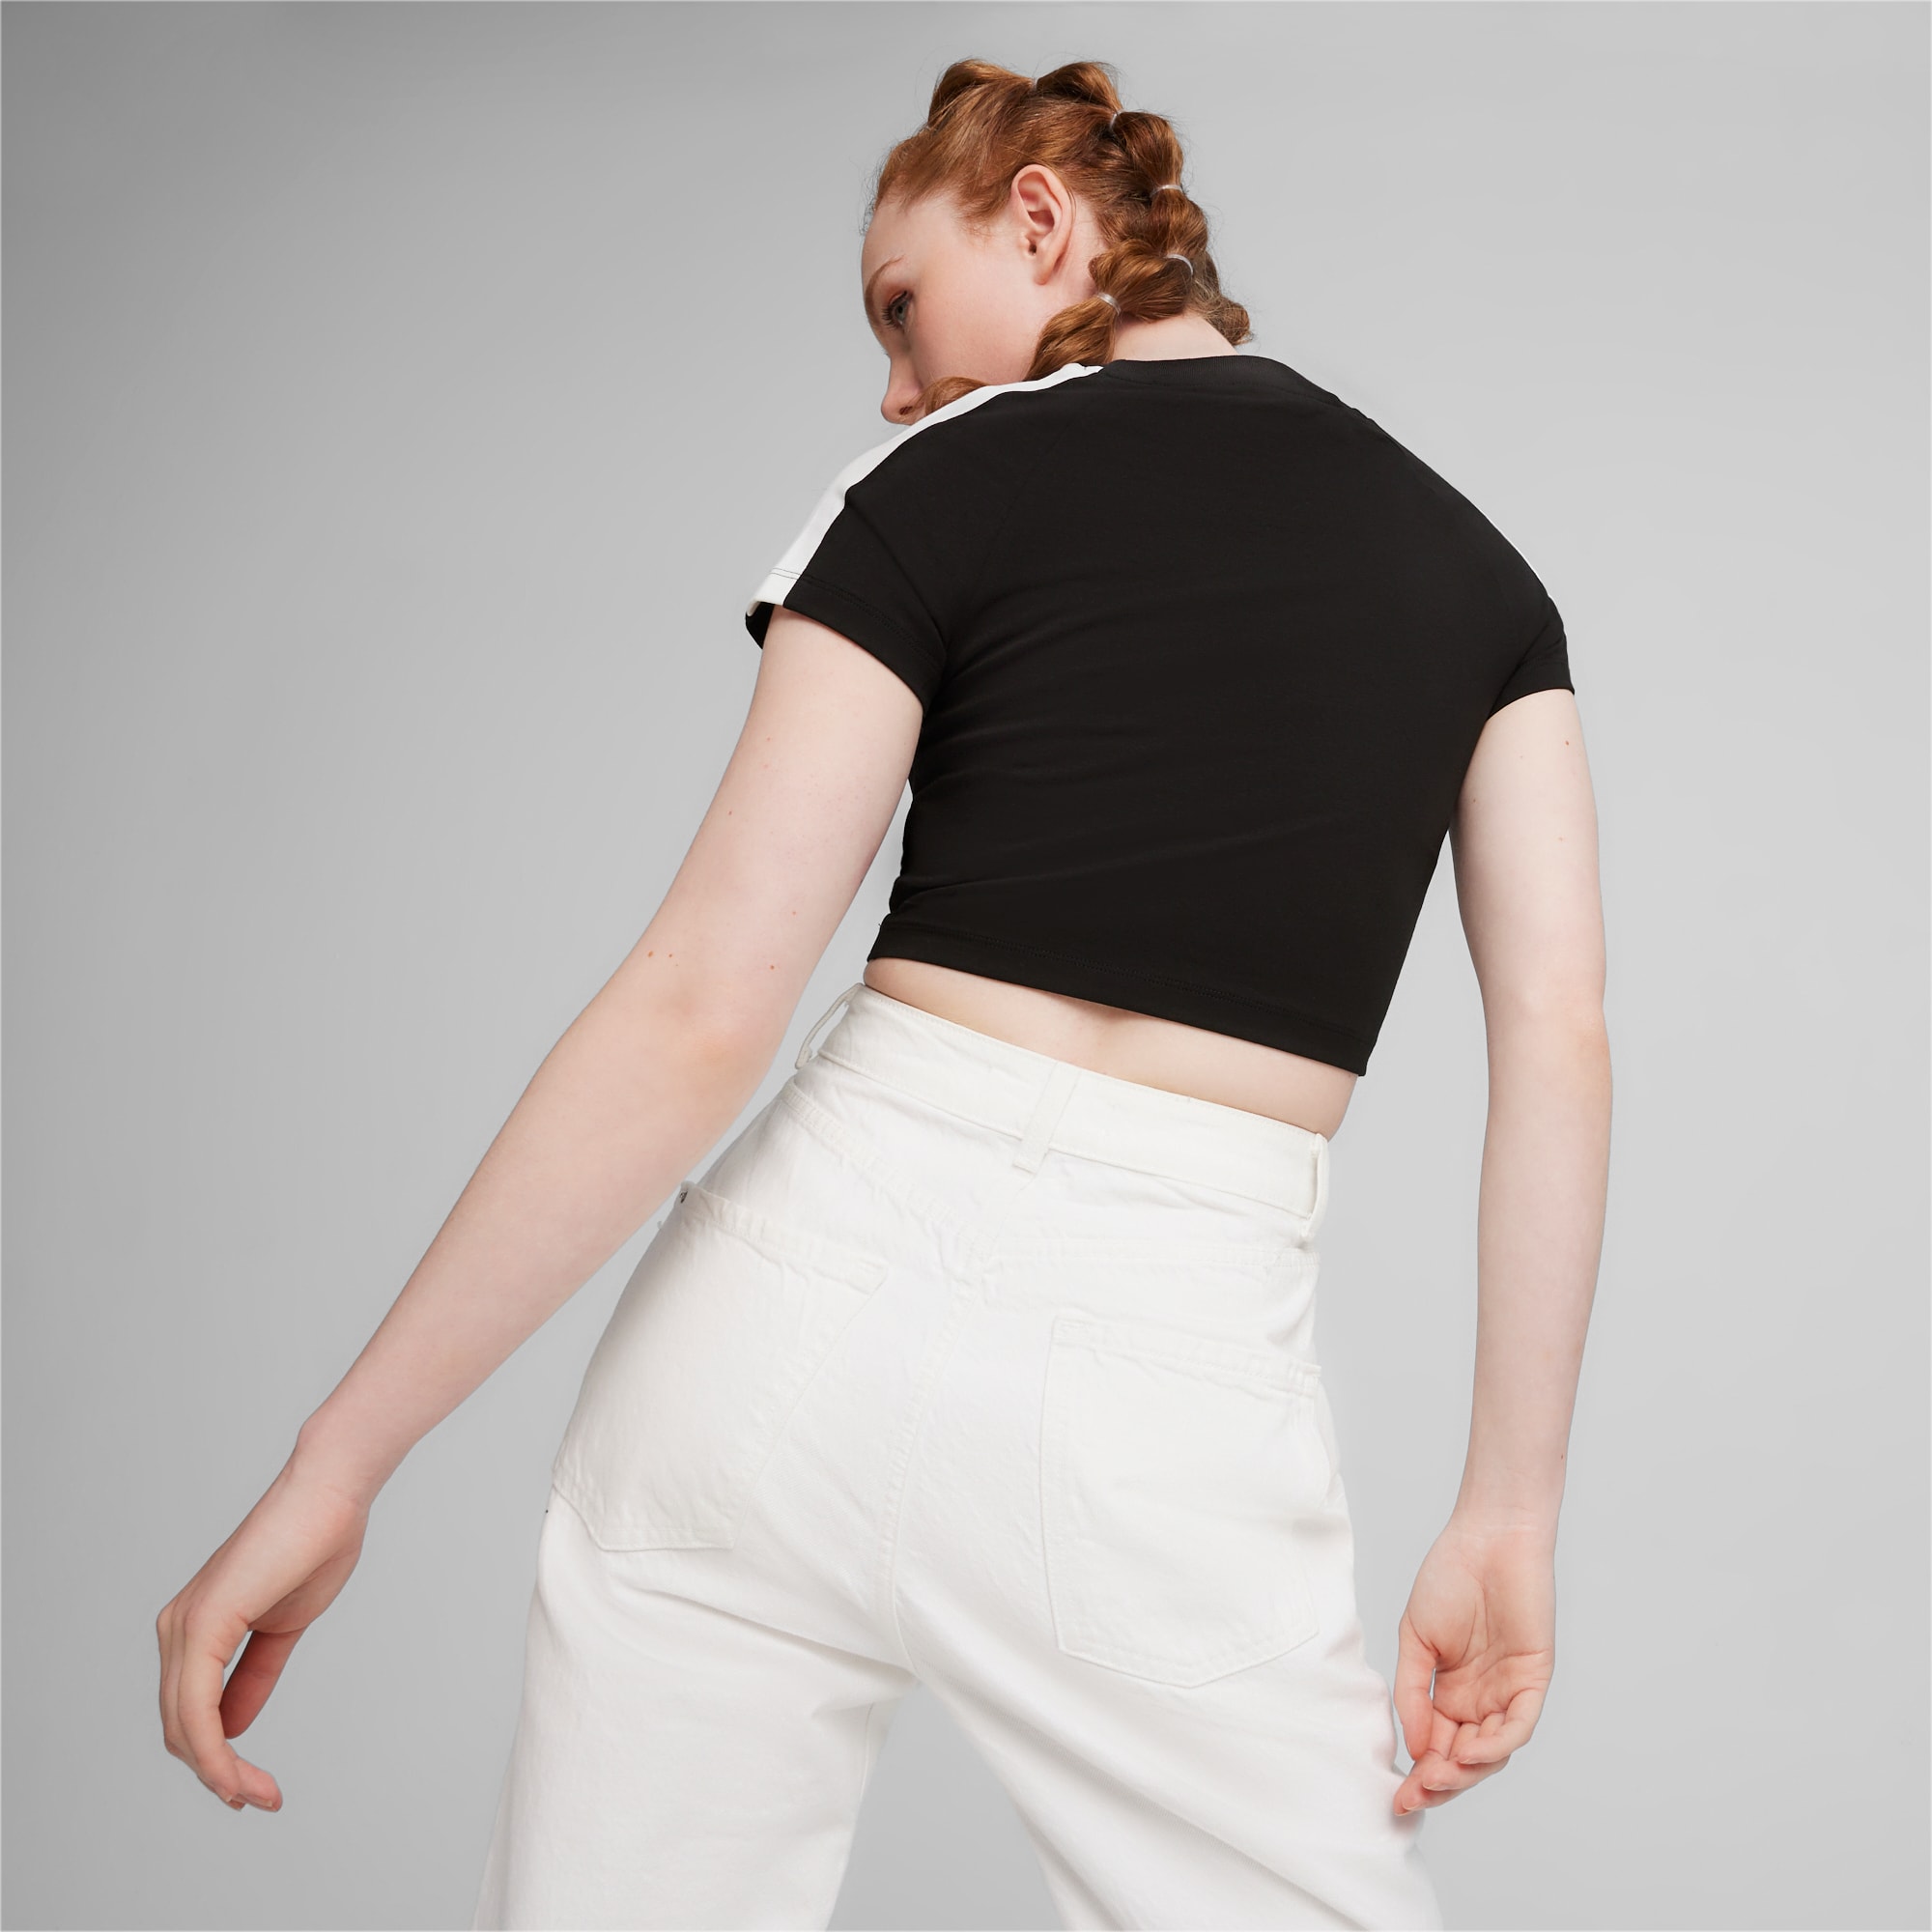 PUMA Iconic T7 Women's Baby T-Shirt, Black, Size S, Clothing